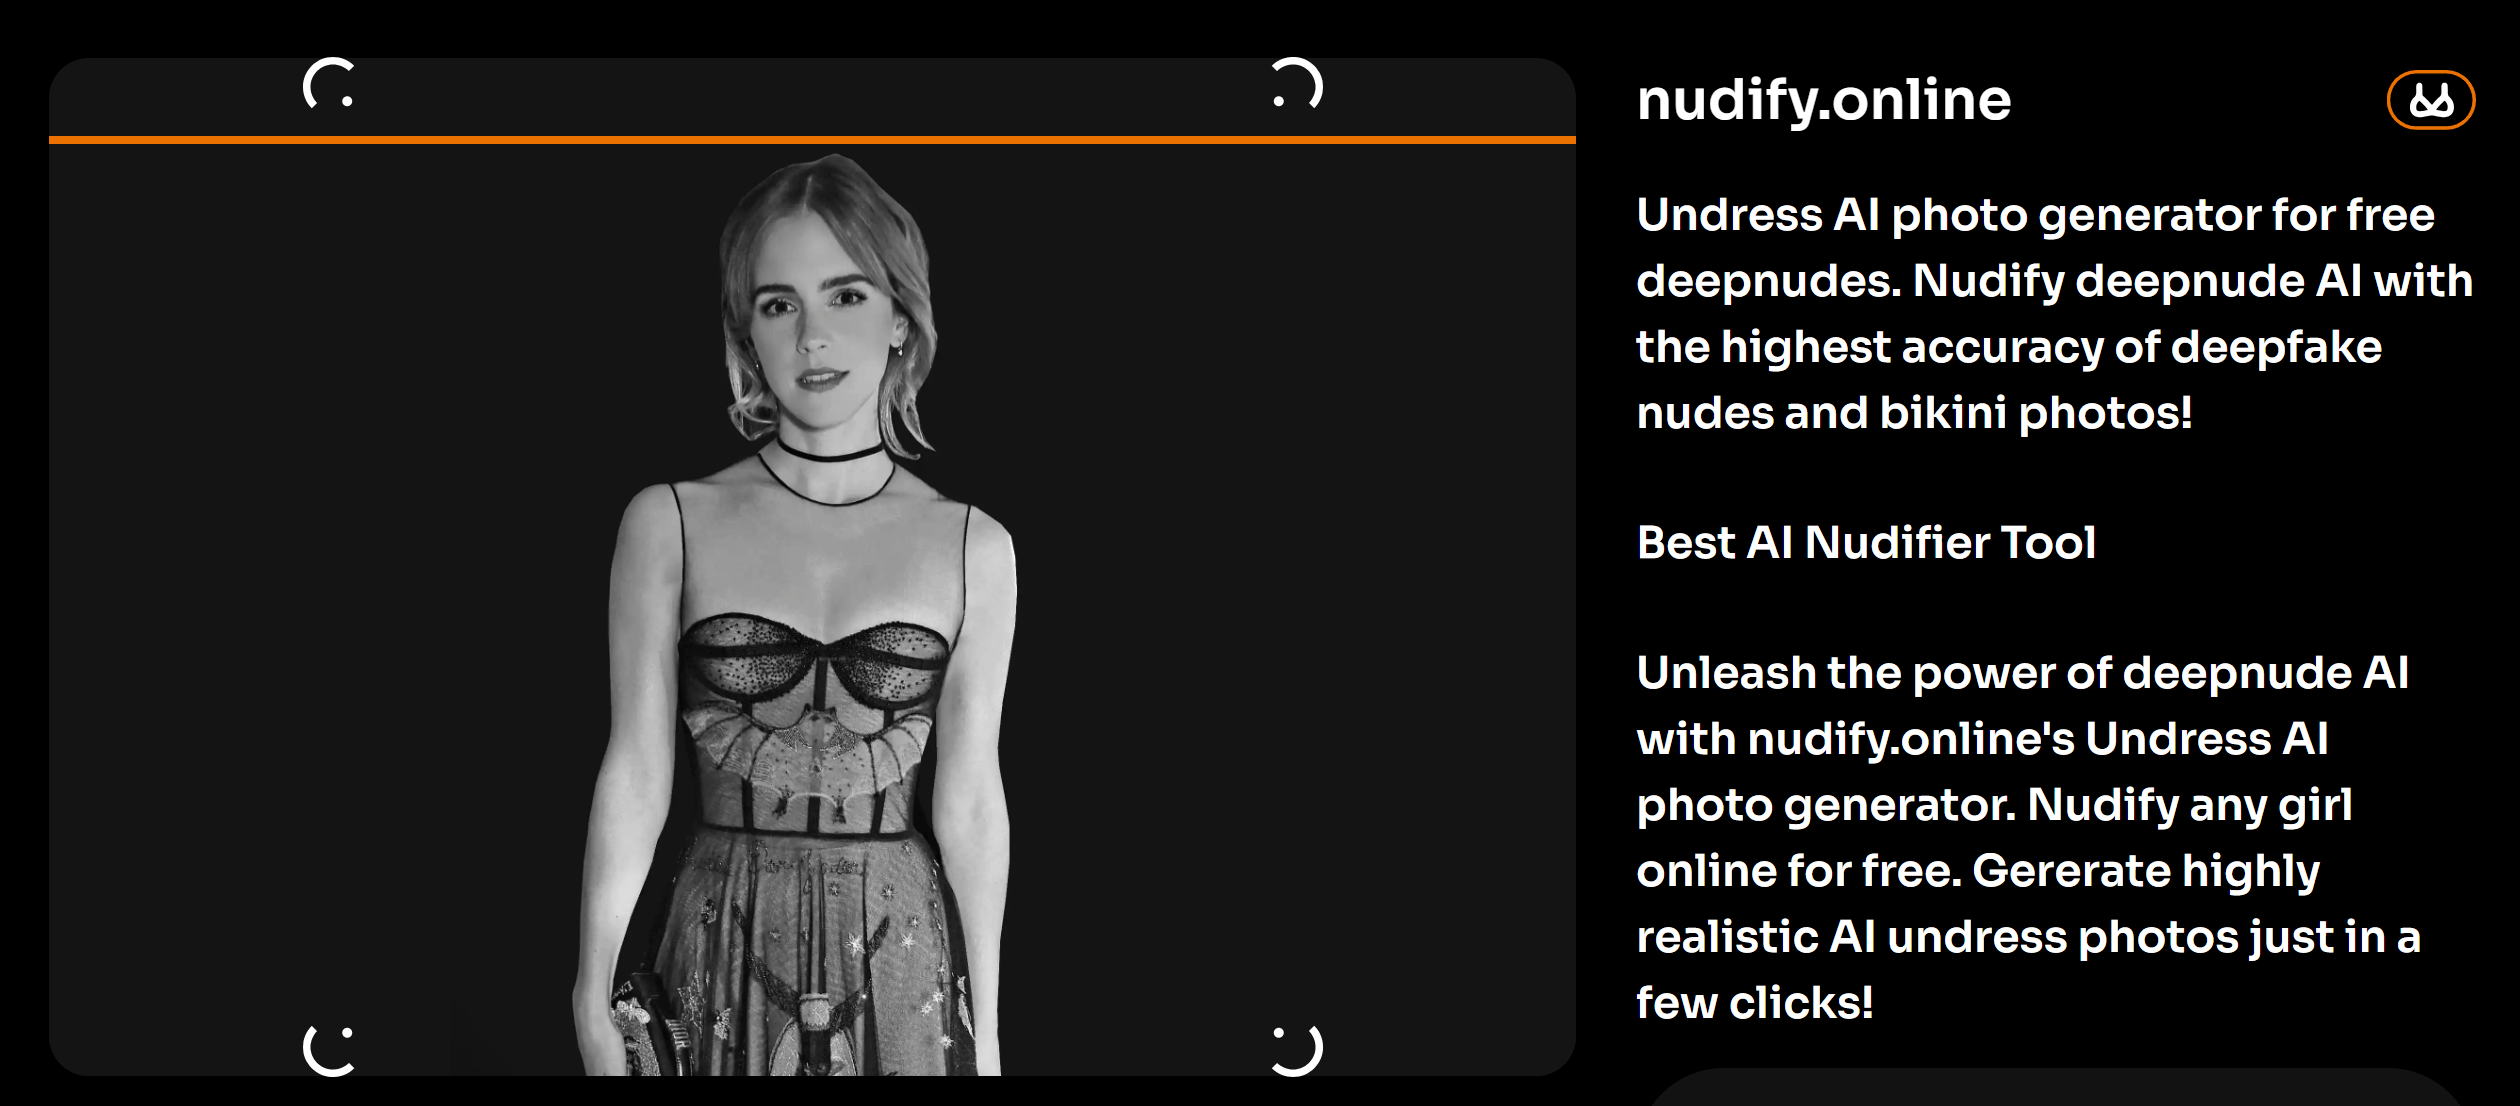 Nudify Online ventsmagazines.co.uk